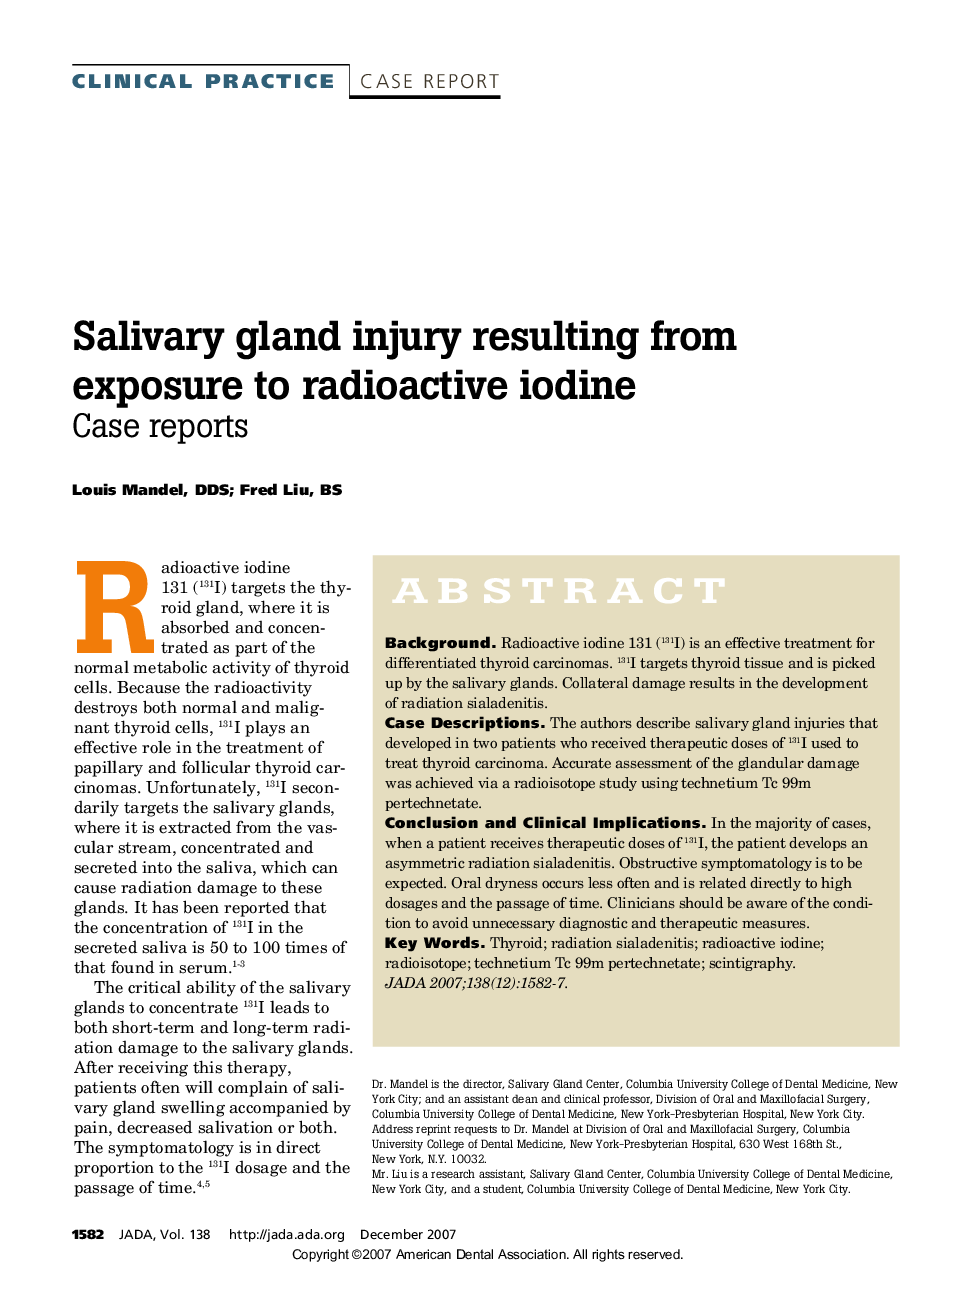 Salivary Gland Injury Resulting From Exposure to Radioactive Iodine